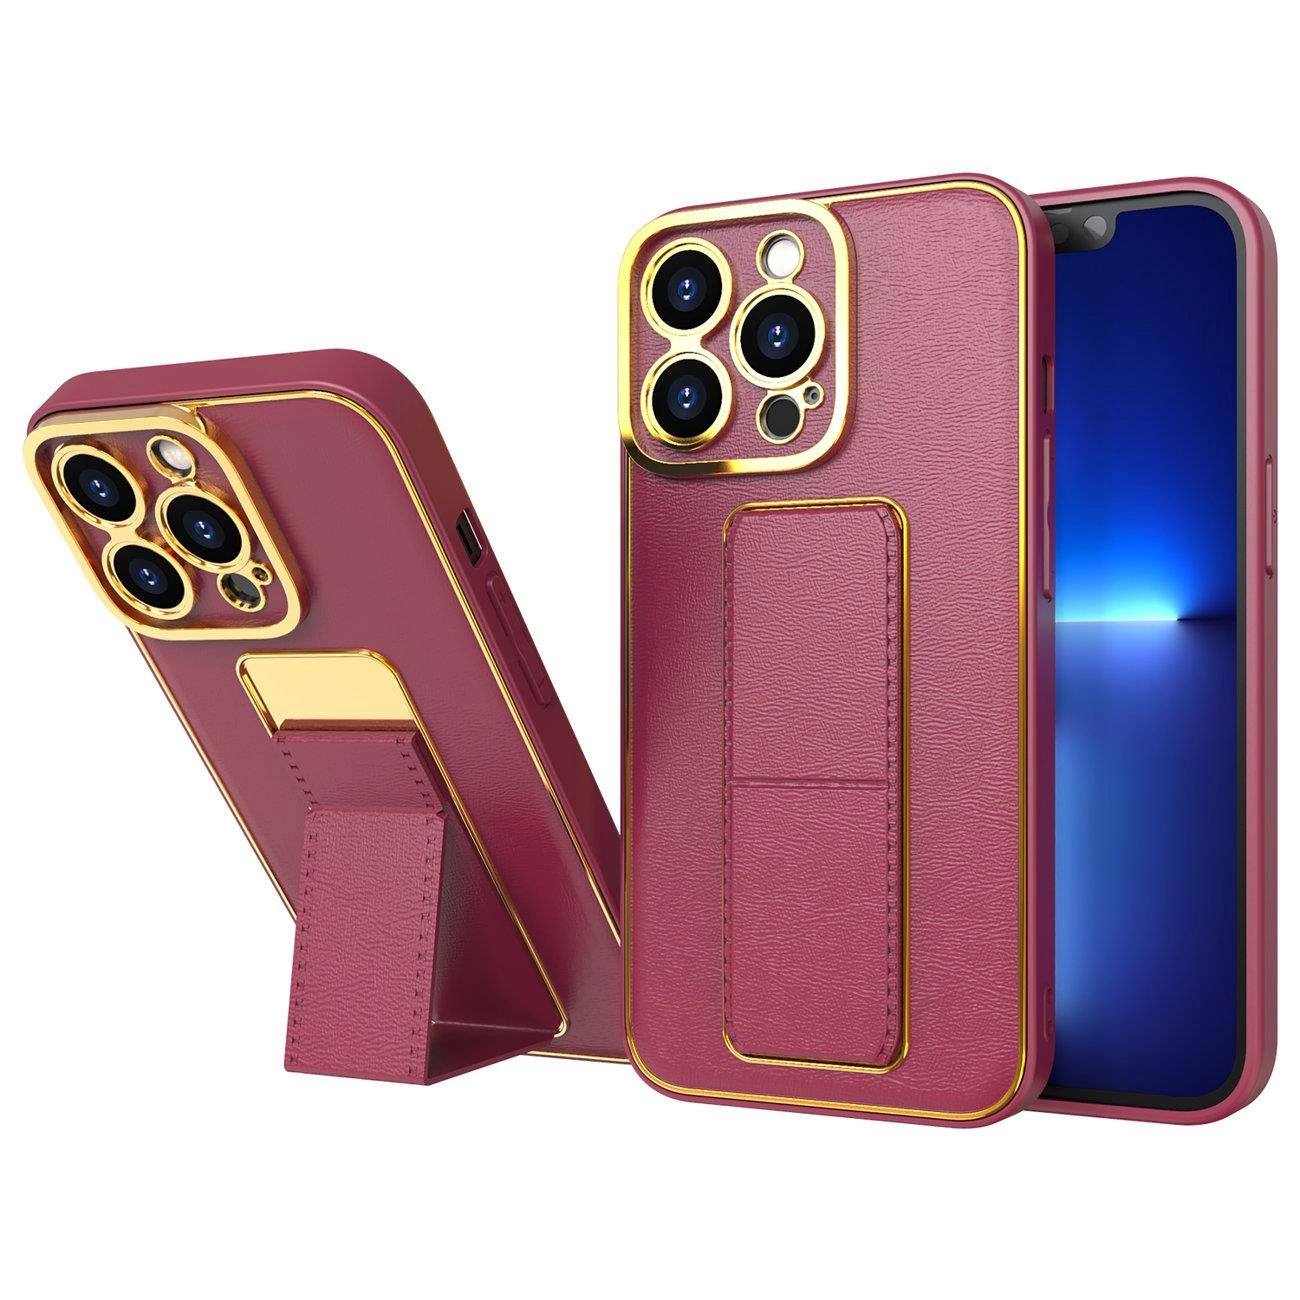 Hurtel Nové pouzdro Kickstand pro Samsung Galaxy A13 se stojánkem červené barvy